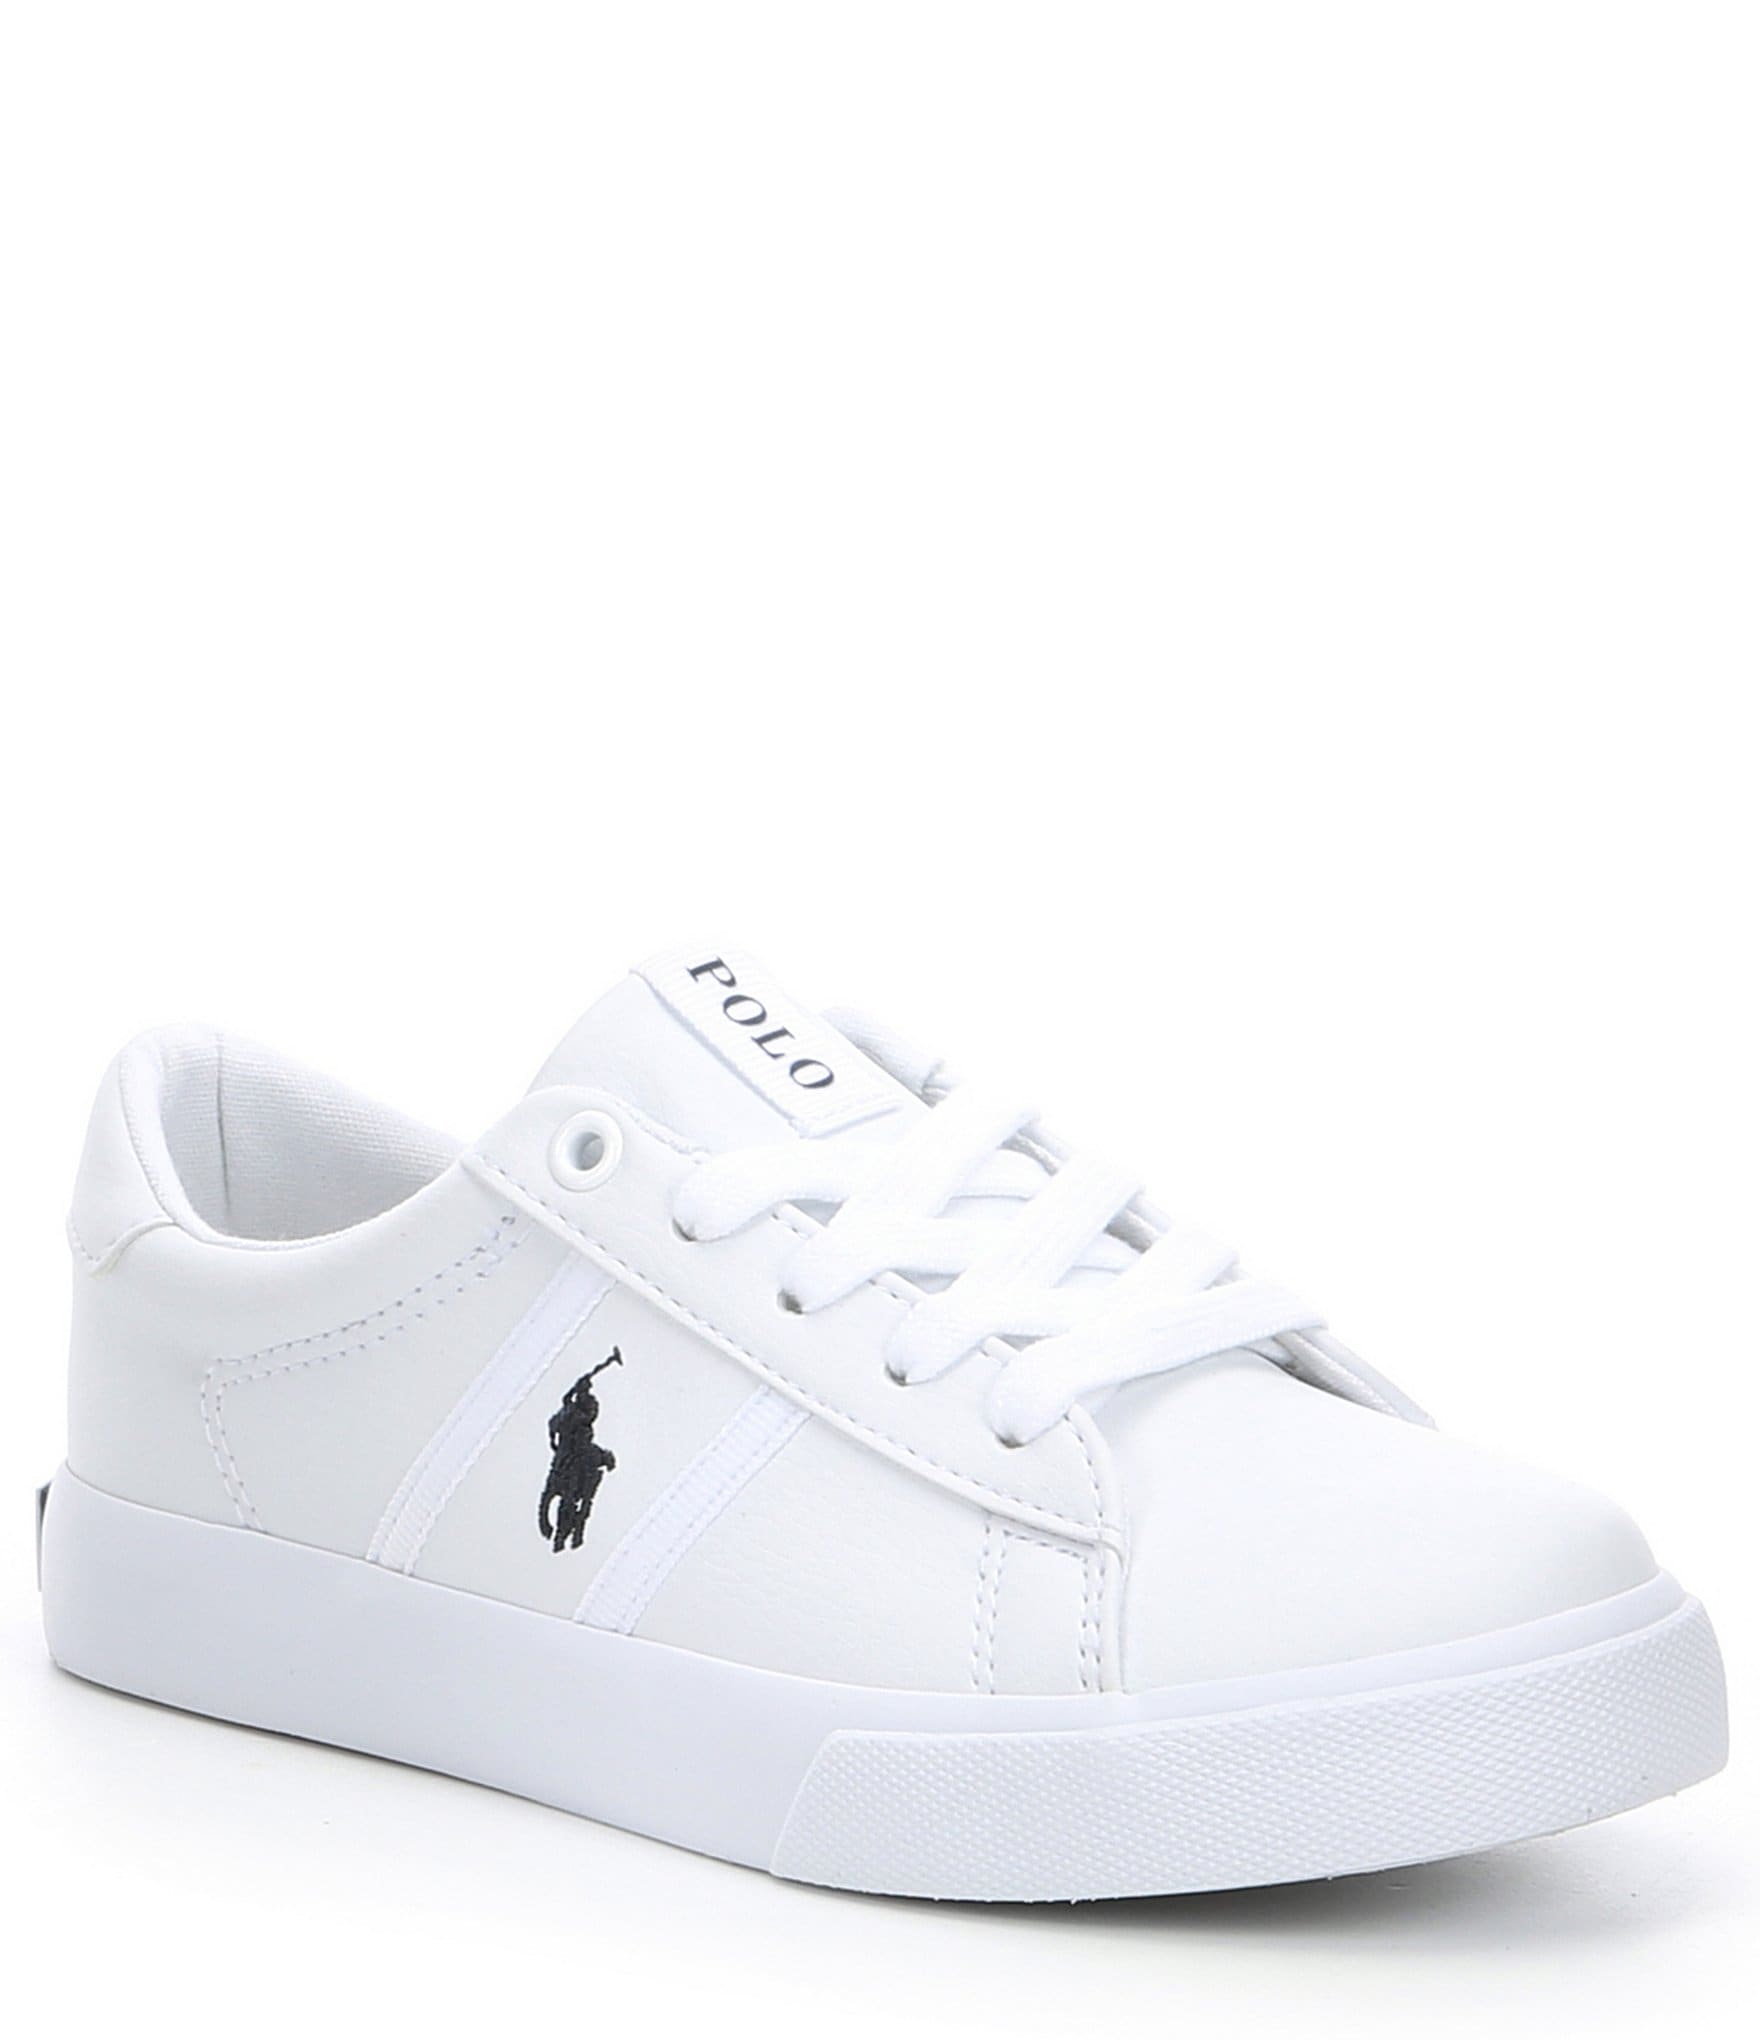 white canvas shoes size 4